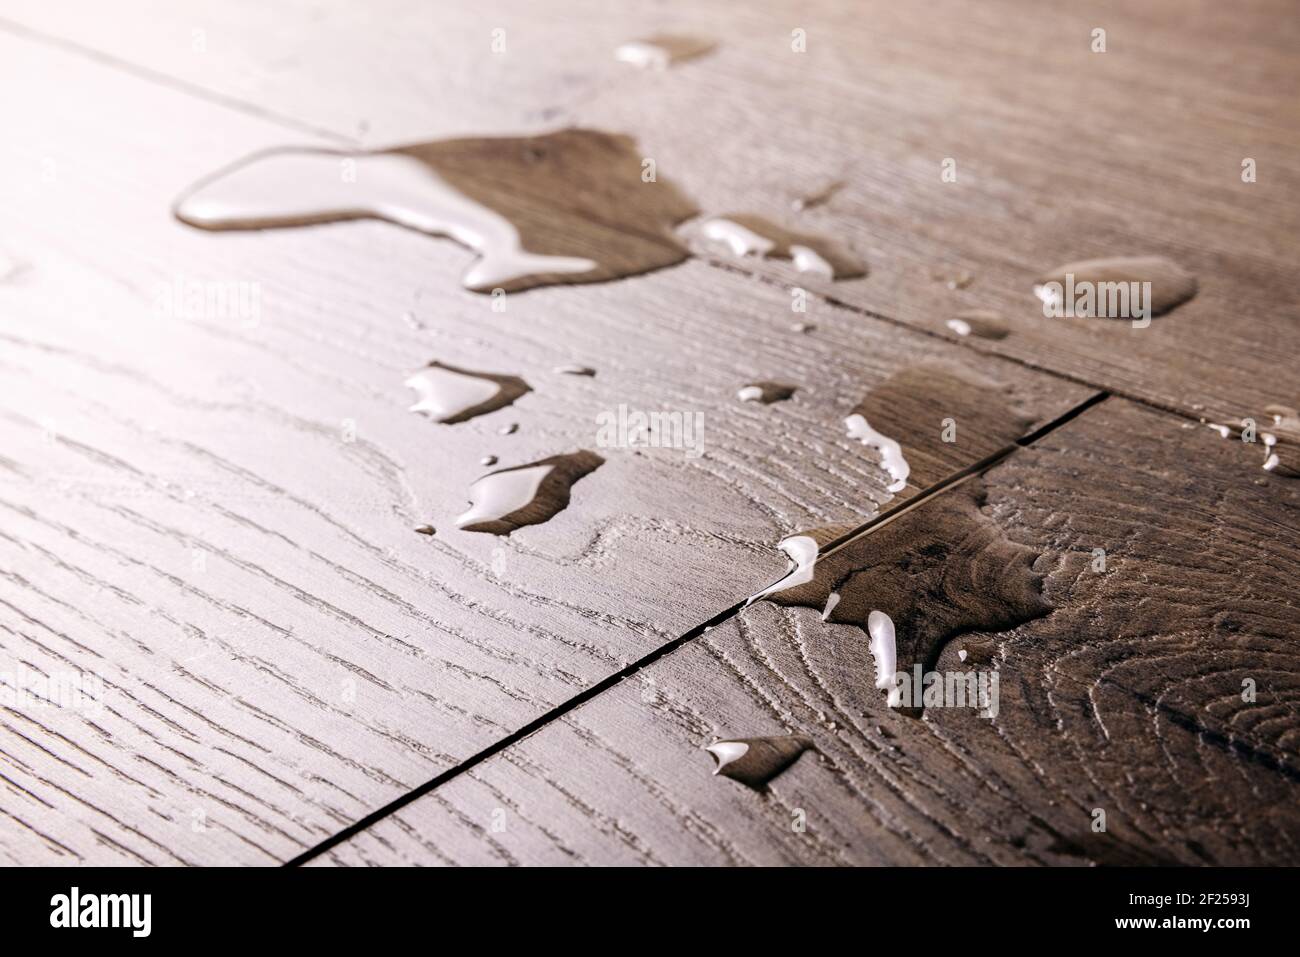 suelos impermeables - gotas de agua derramada sobre suelos laminados de madera Foto de stock